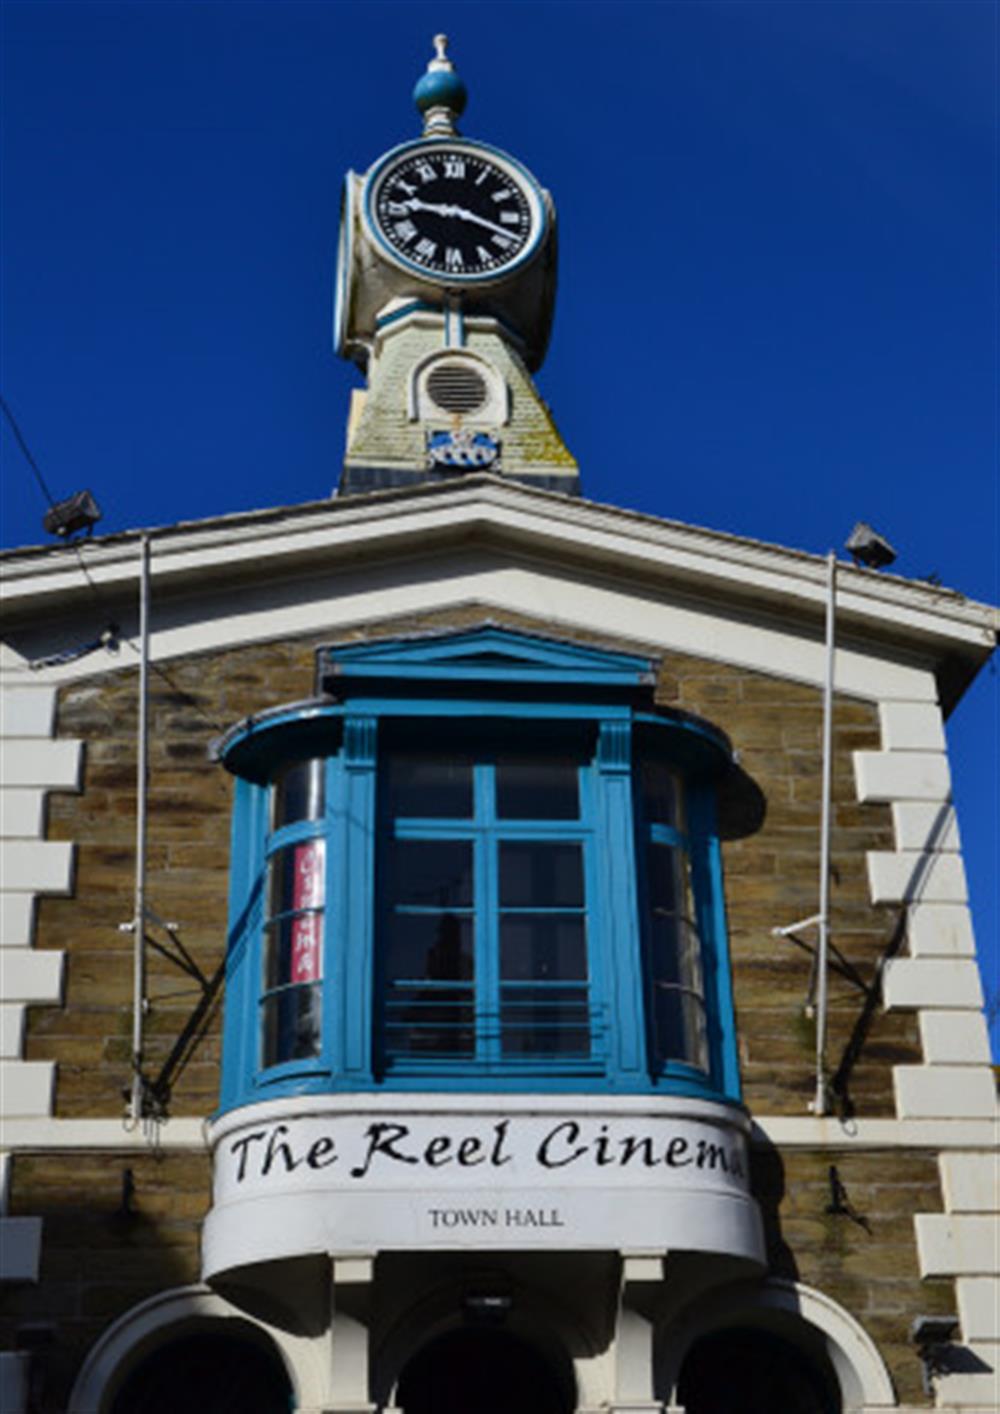 The Kingsbridge cinema. at 3 Riverside in Kingsbridge